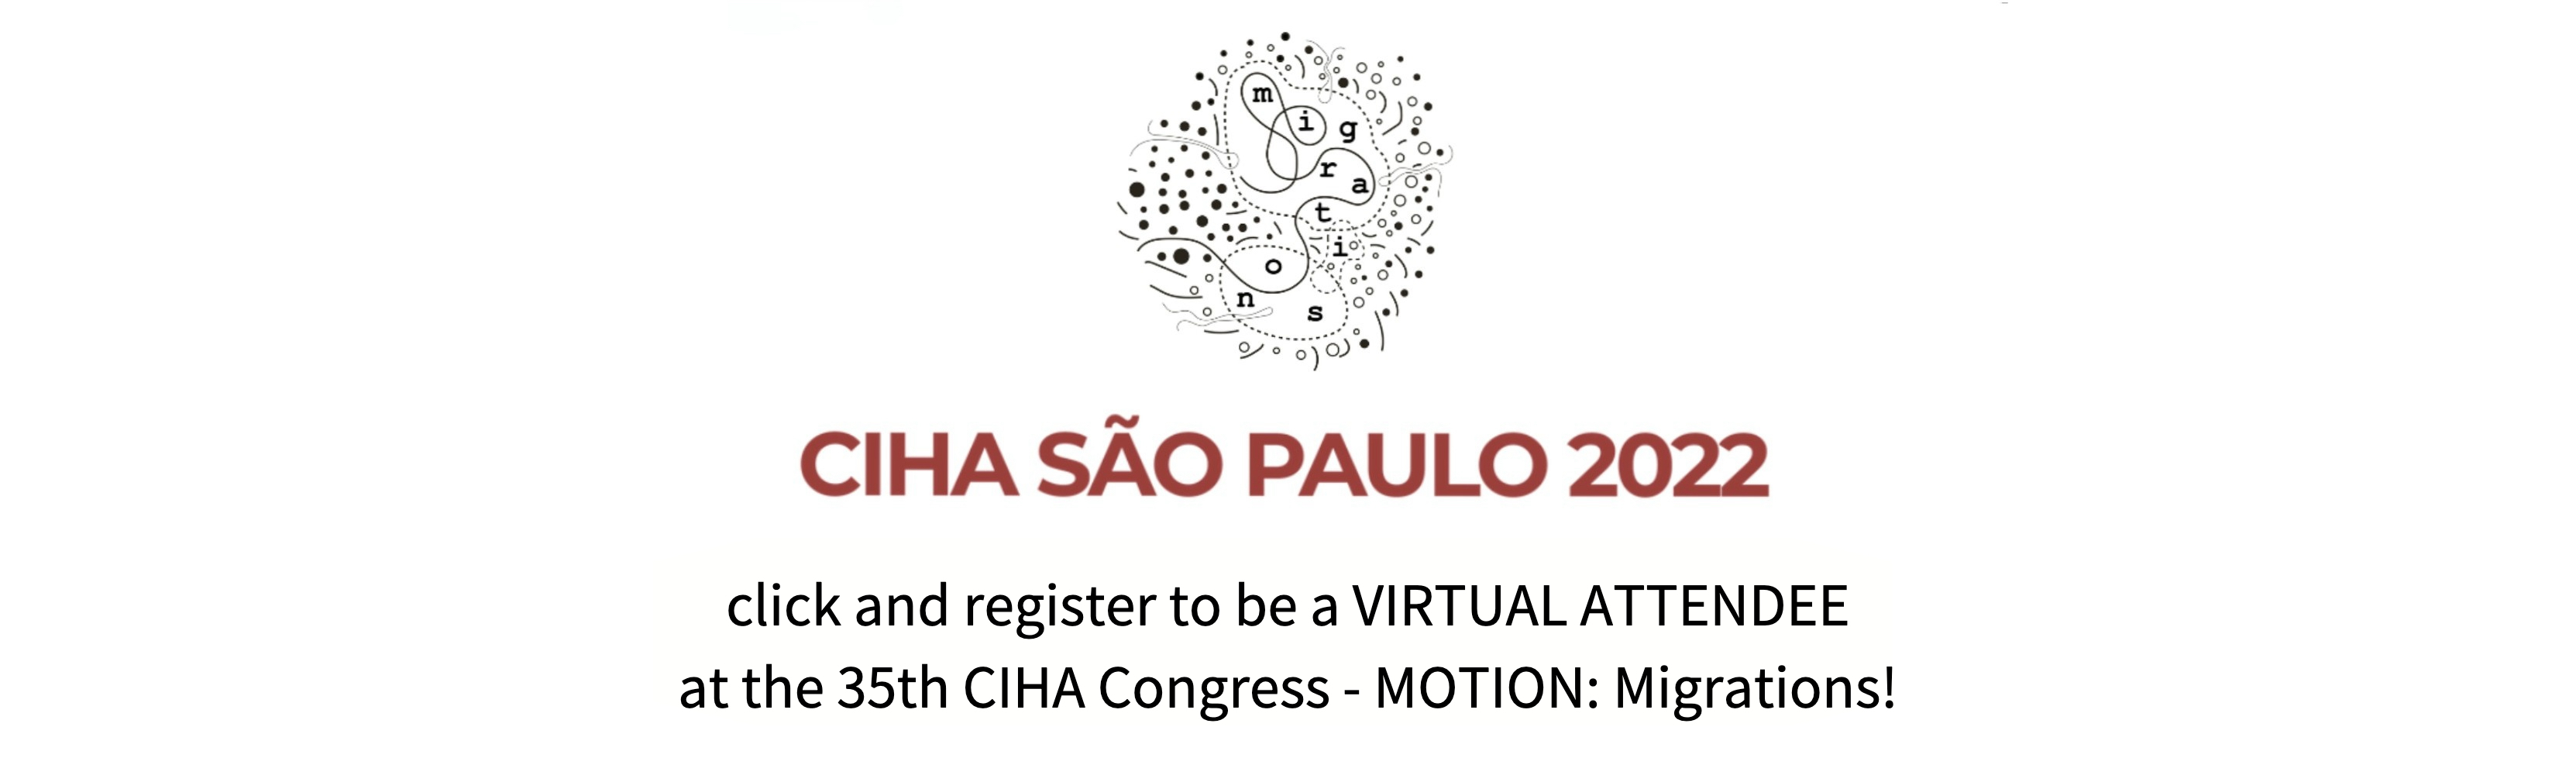 CIHA SÃO PAULO "MOTION: MIGRATIONS" Registration